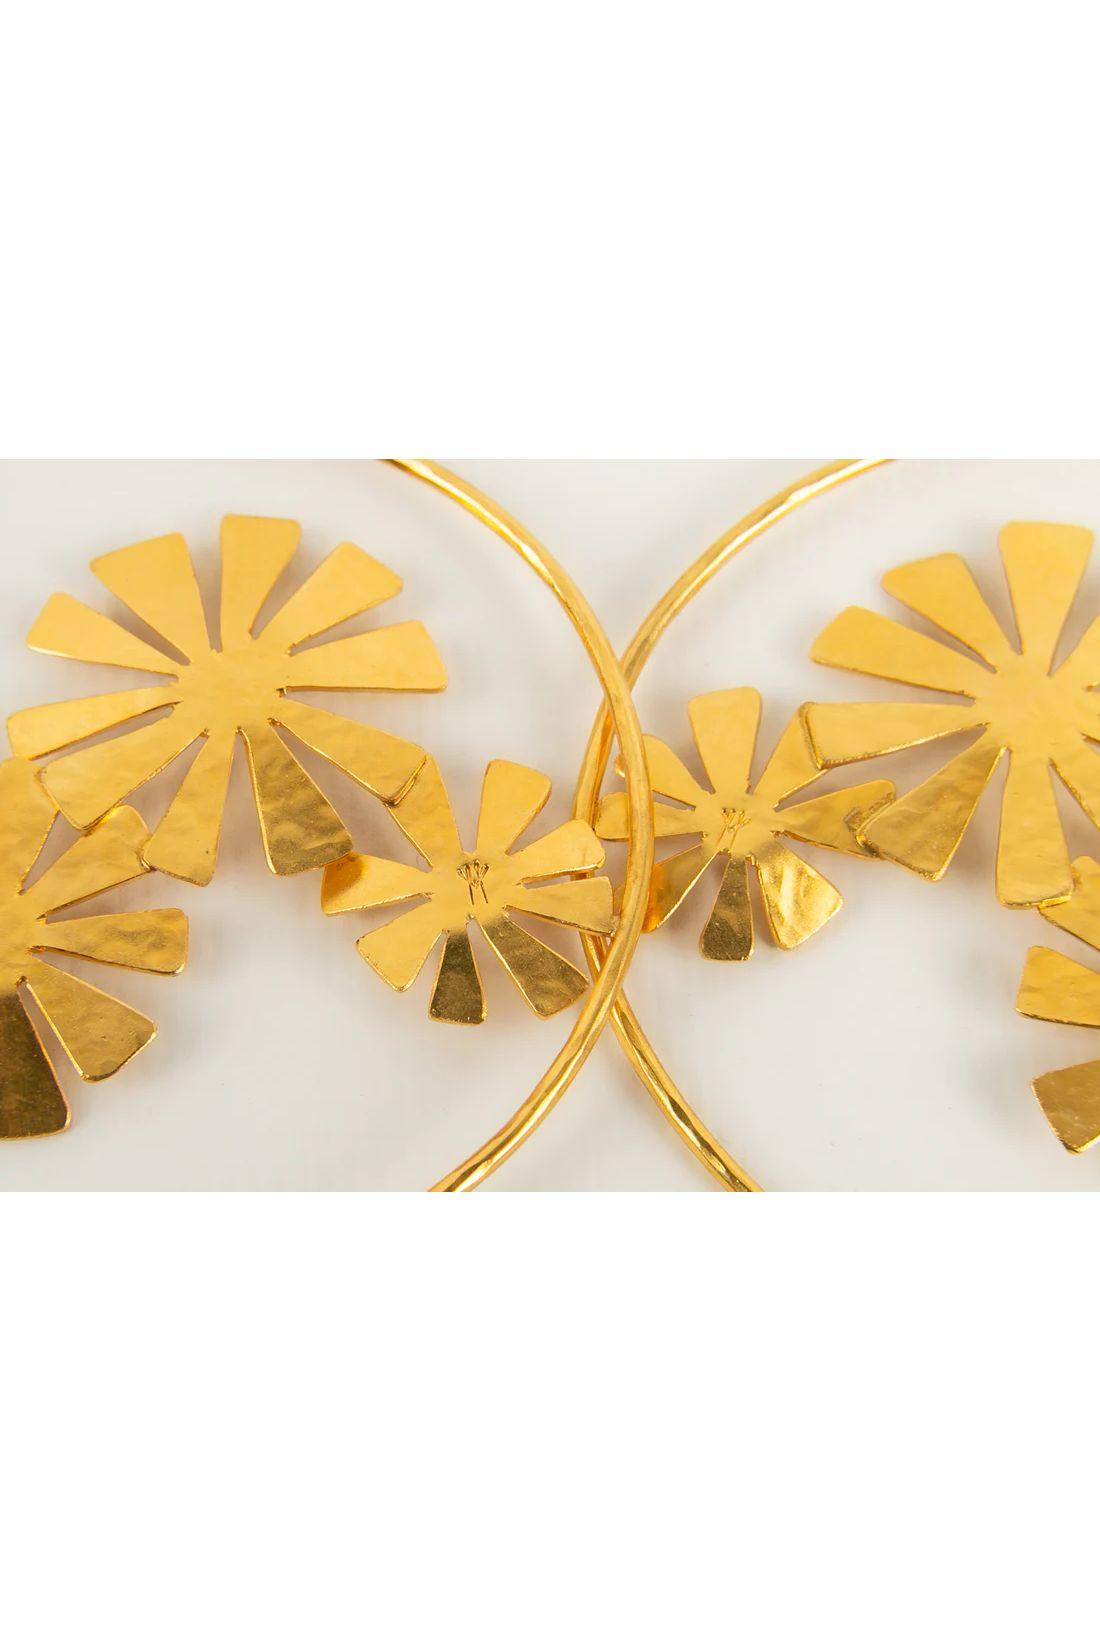 Women's Van der Straeten Gold metal Creoles Decorated with Monogrammed Daisies Earrings For Sale